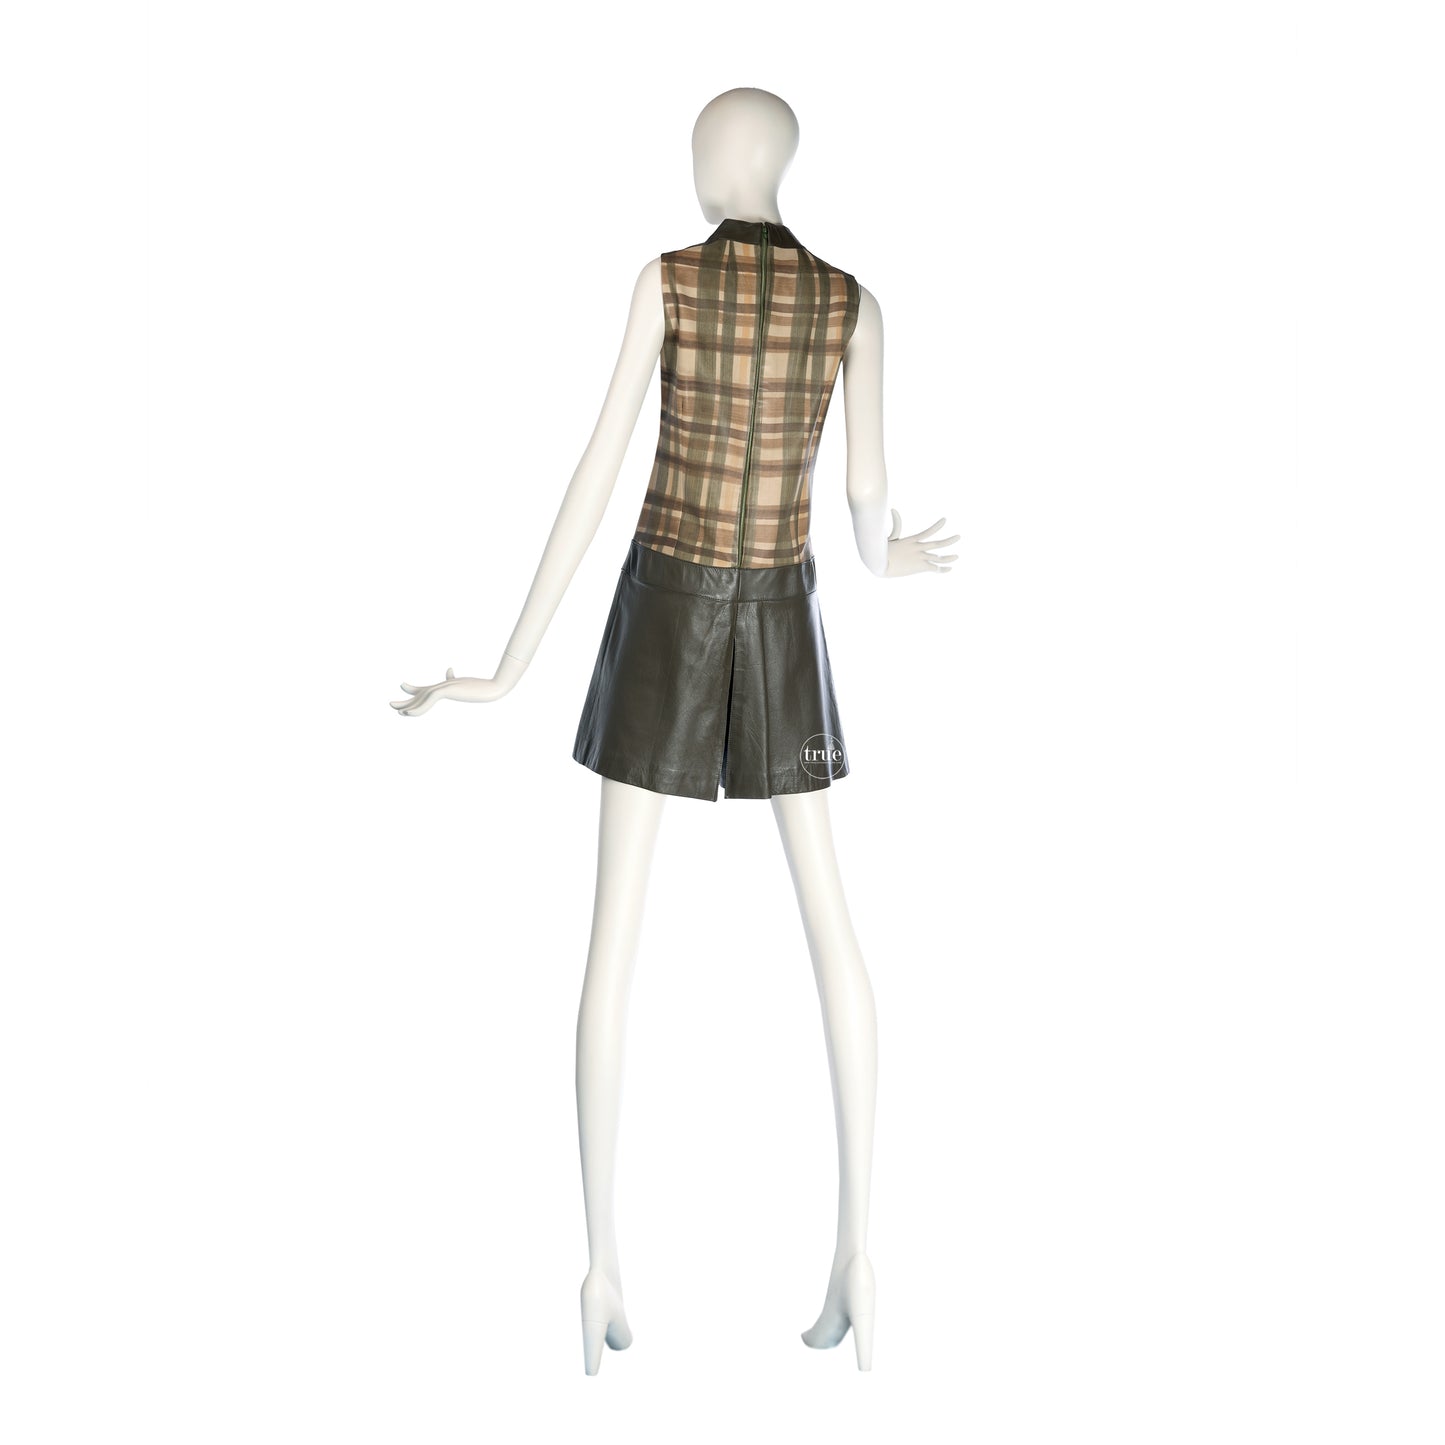 vintage 1960's dress jumpsuit ...mod couture BEGED OR leather skorts jumpsuit dress